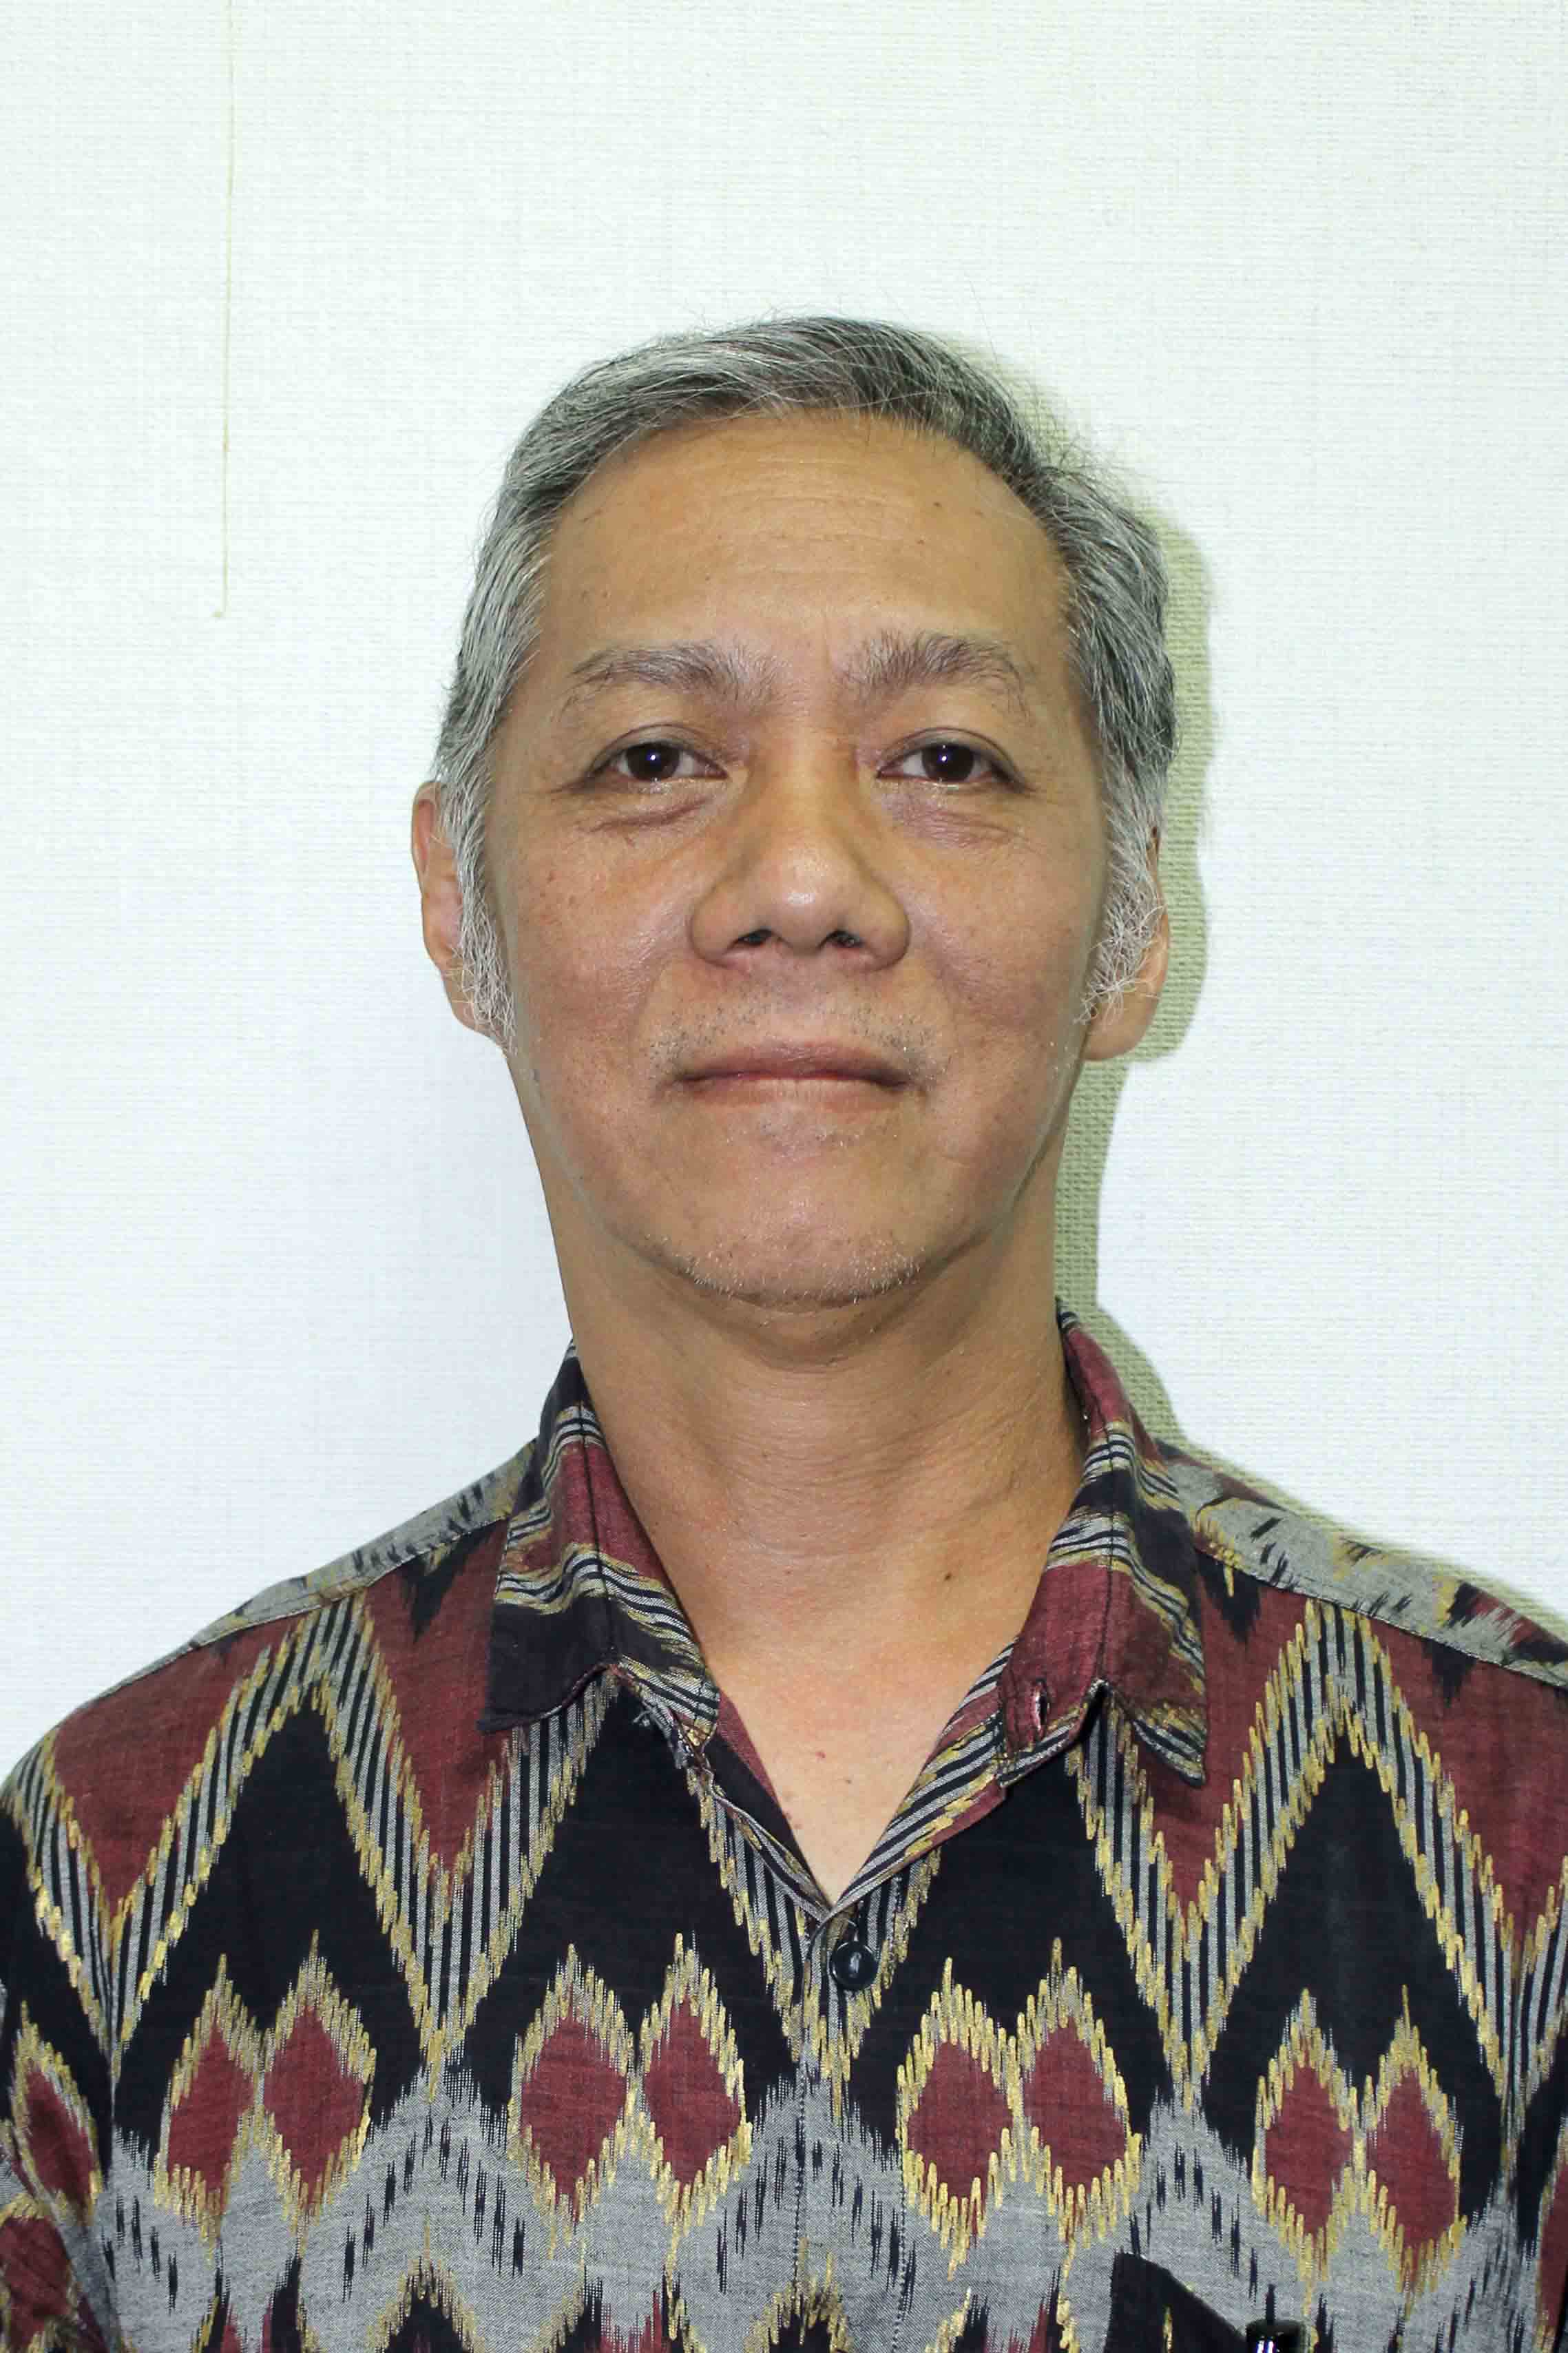 prof-djoko-t-iskandar-a-witness-to-the-diversity-of-indonesia